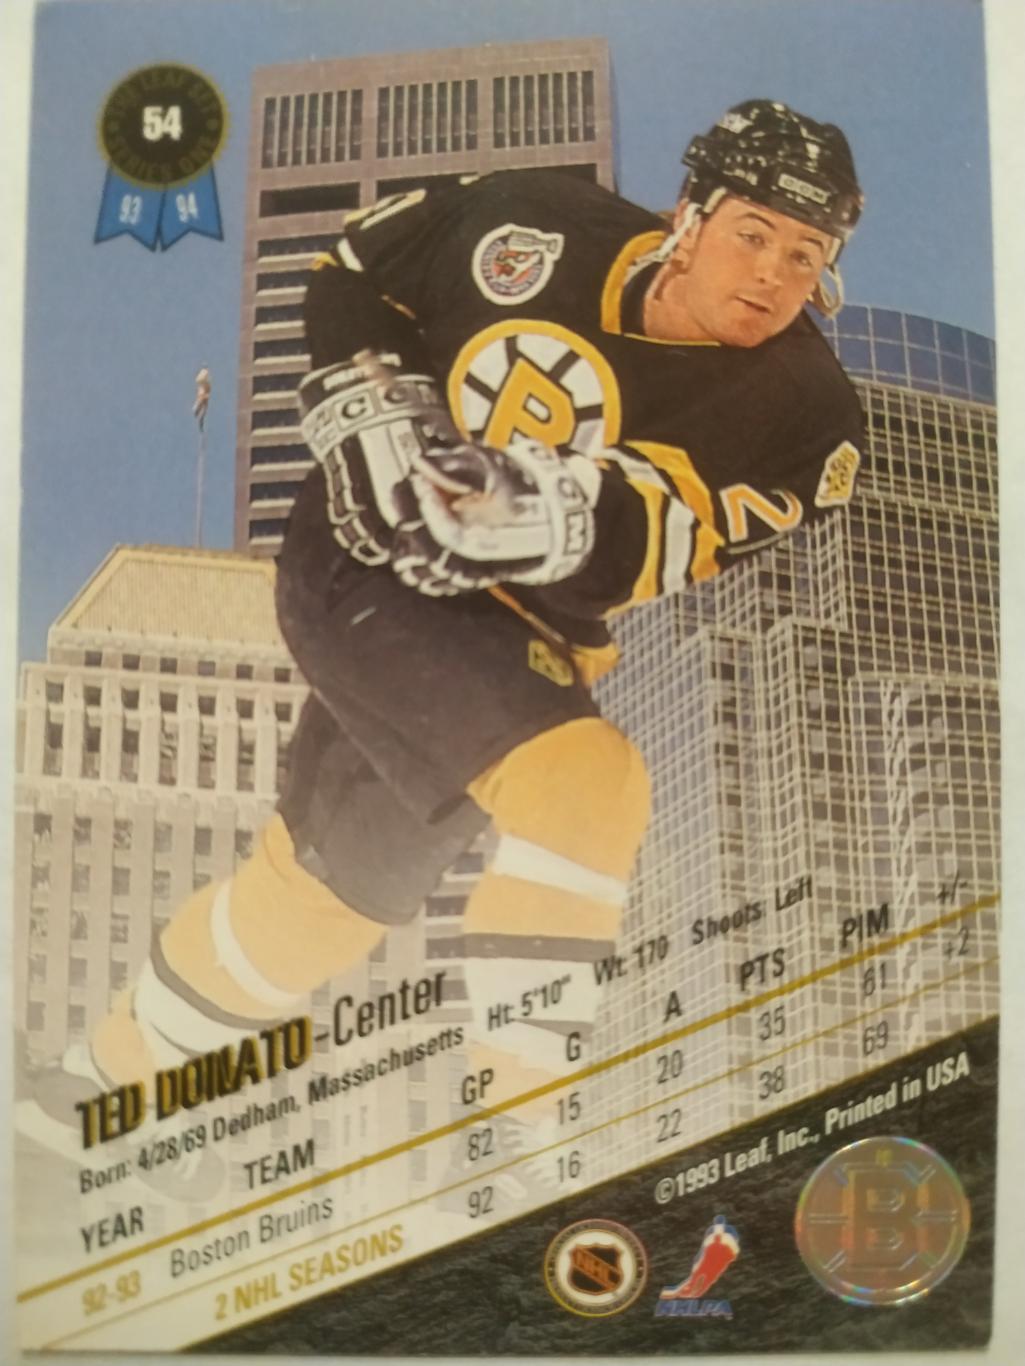 ХОККЕЙ КАРТОЧКА НХЛ LEAF SET SERIES ONE 1993-94 TED DONATO BOSTON BRUINS #54 1